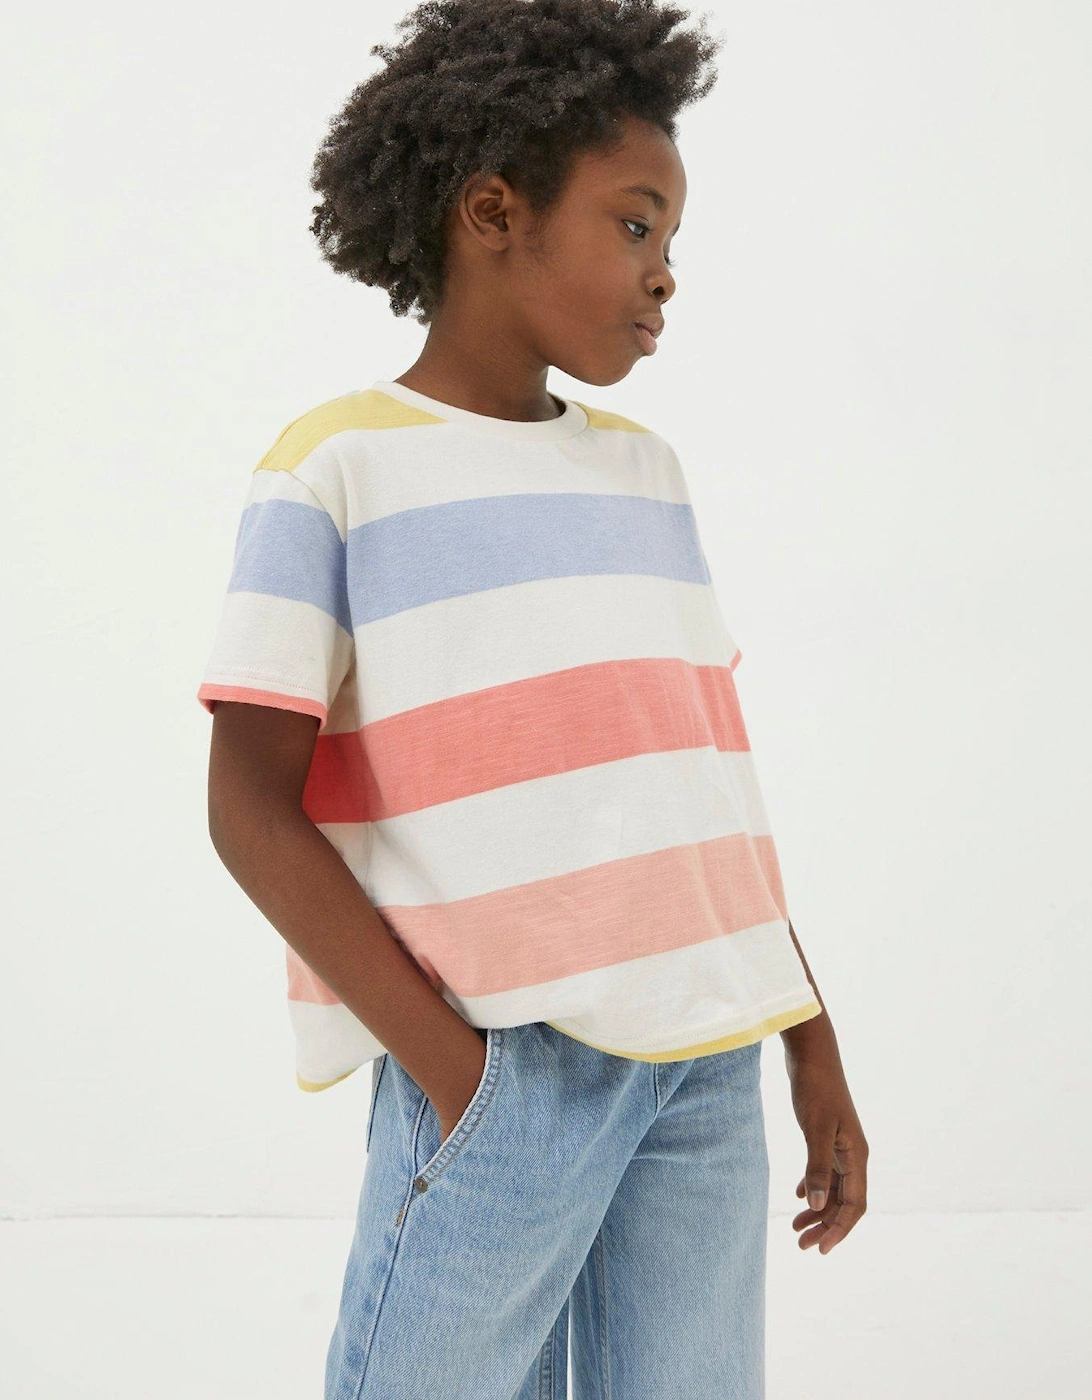 Girls Block Stripe Short Sleeve Tshirt - Multi